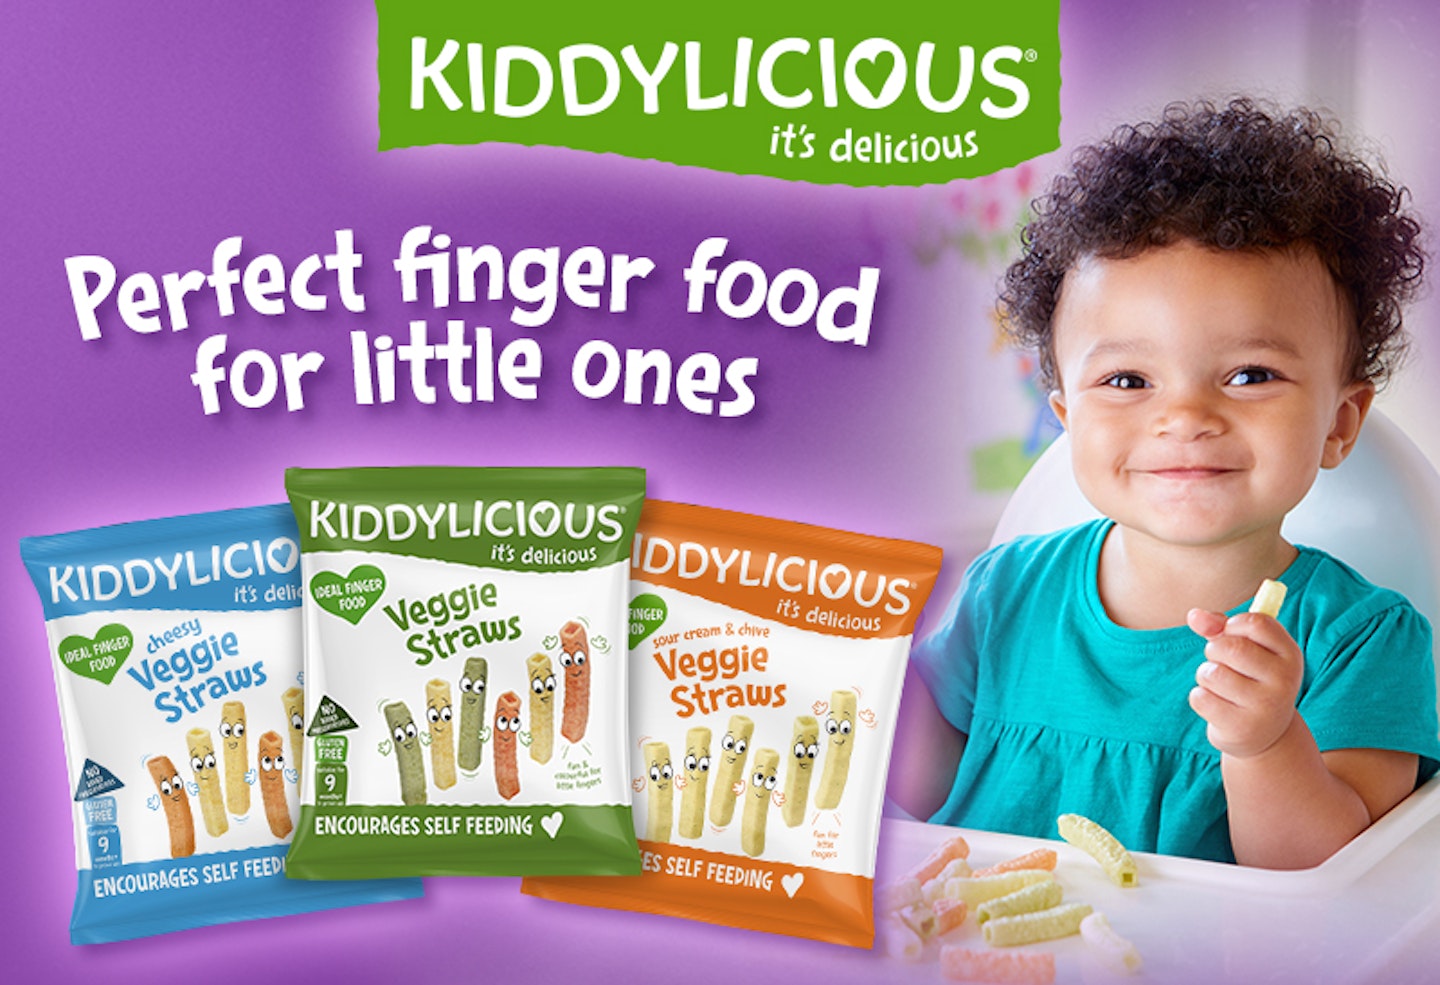 Kiddylicious finger food